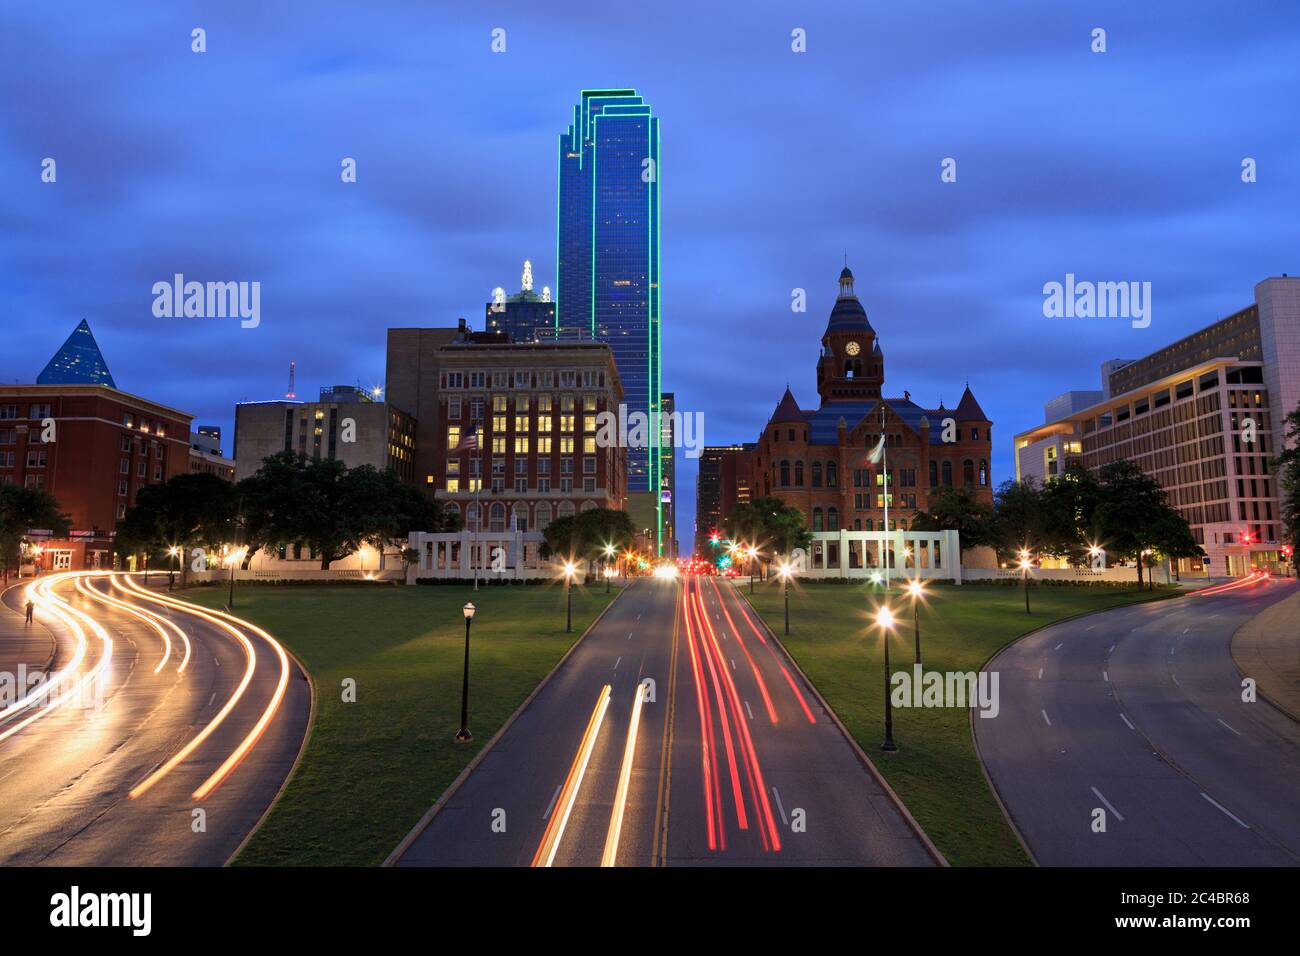 Dealey Plaza, Dallas, Texas, USA Banque D'Images